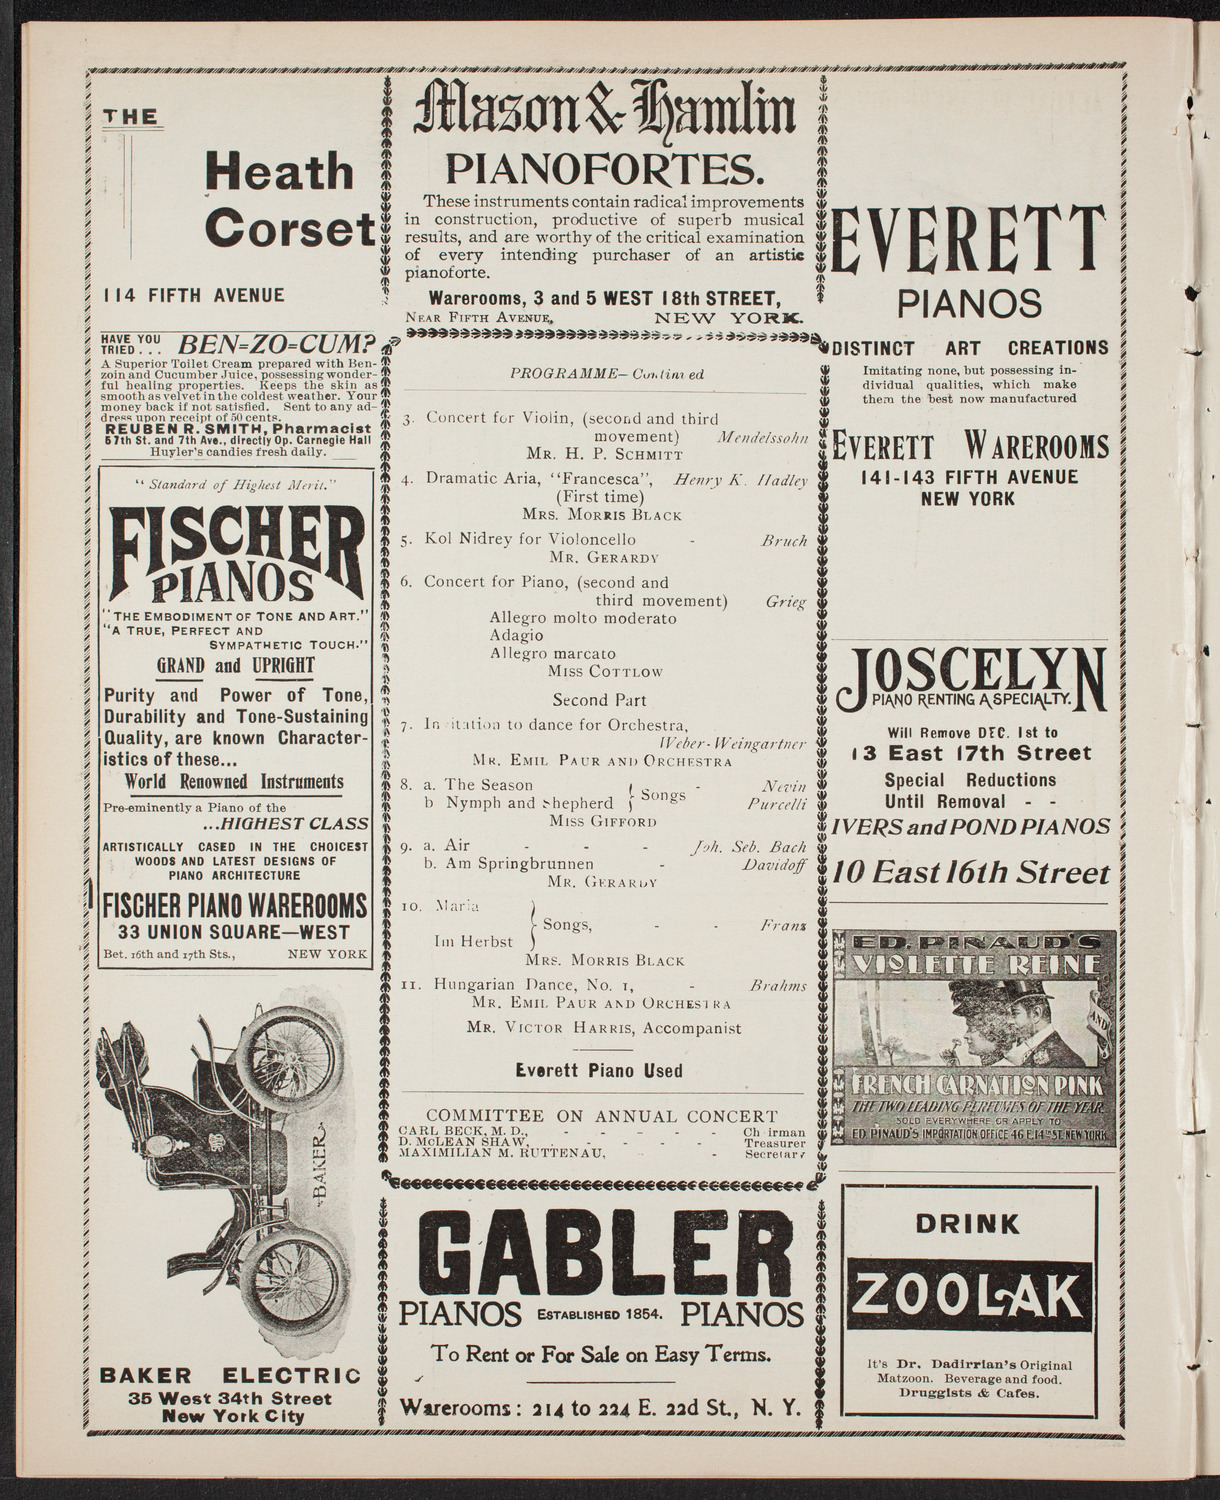 Benefit: St. Mark's Hospital, November 30, 1901, program page 8